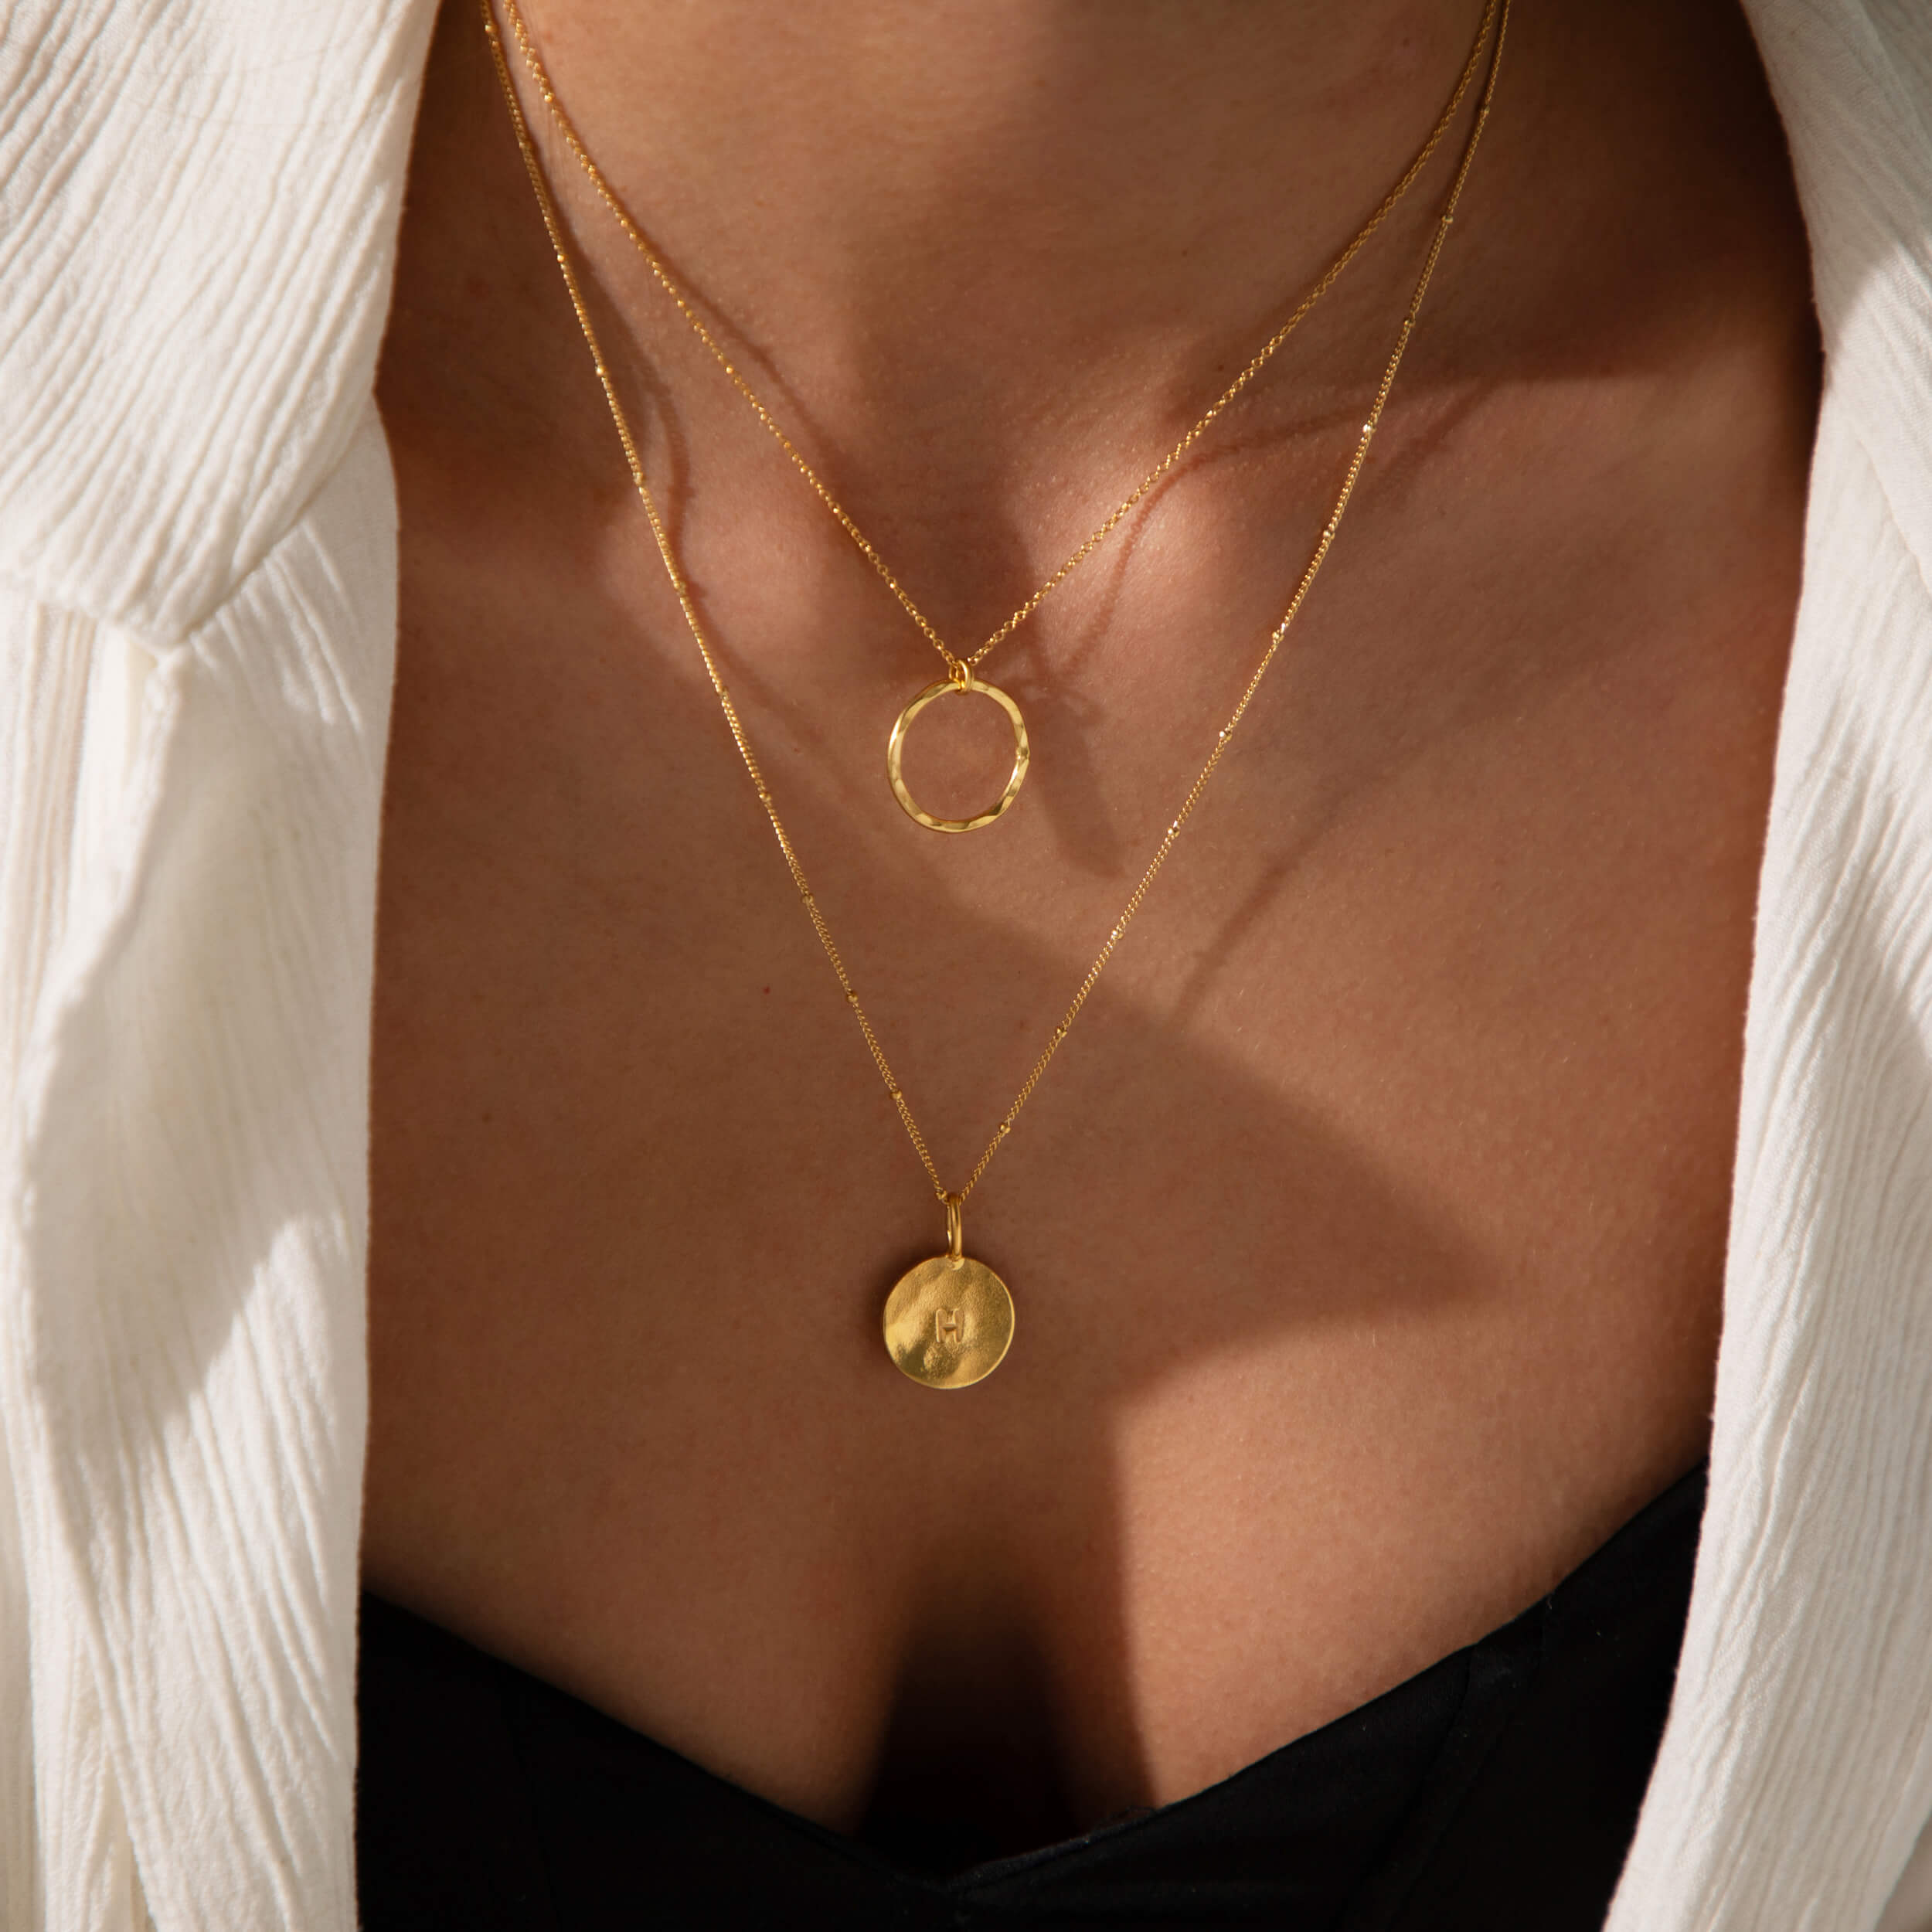 sheila necklace, initial necklace, ejd necklace, eleanor jewellery desig